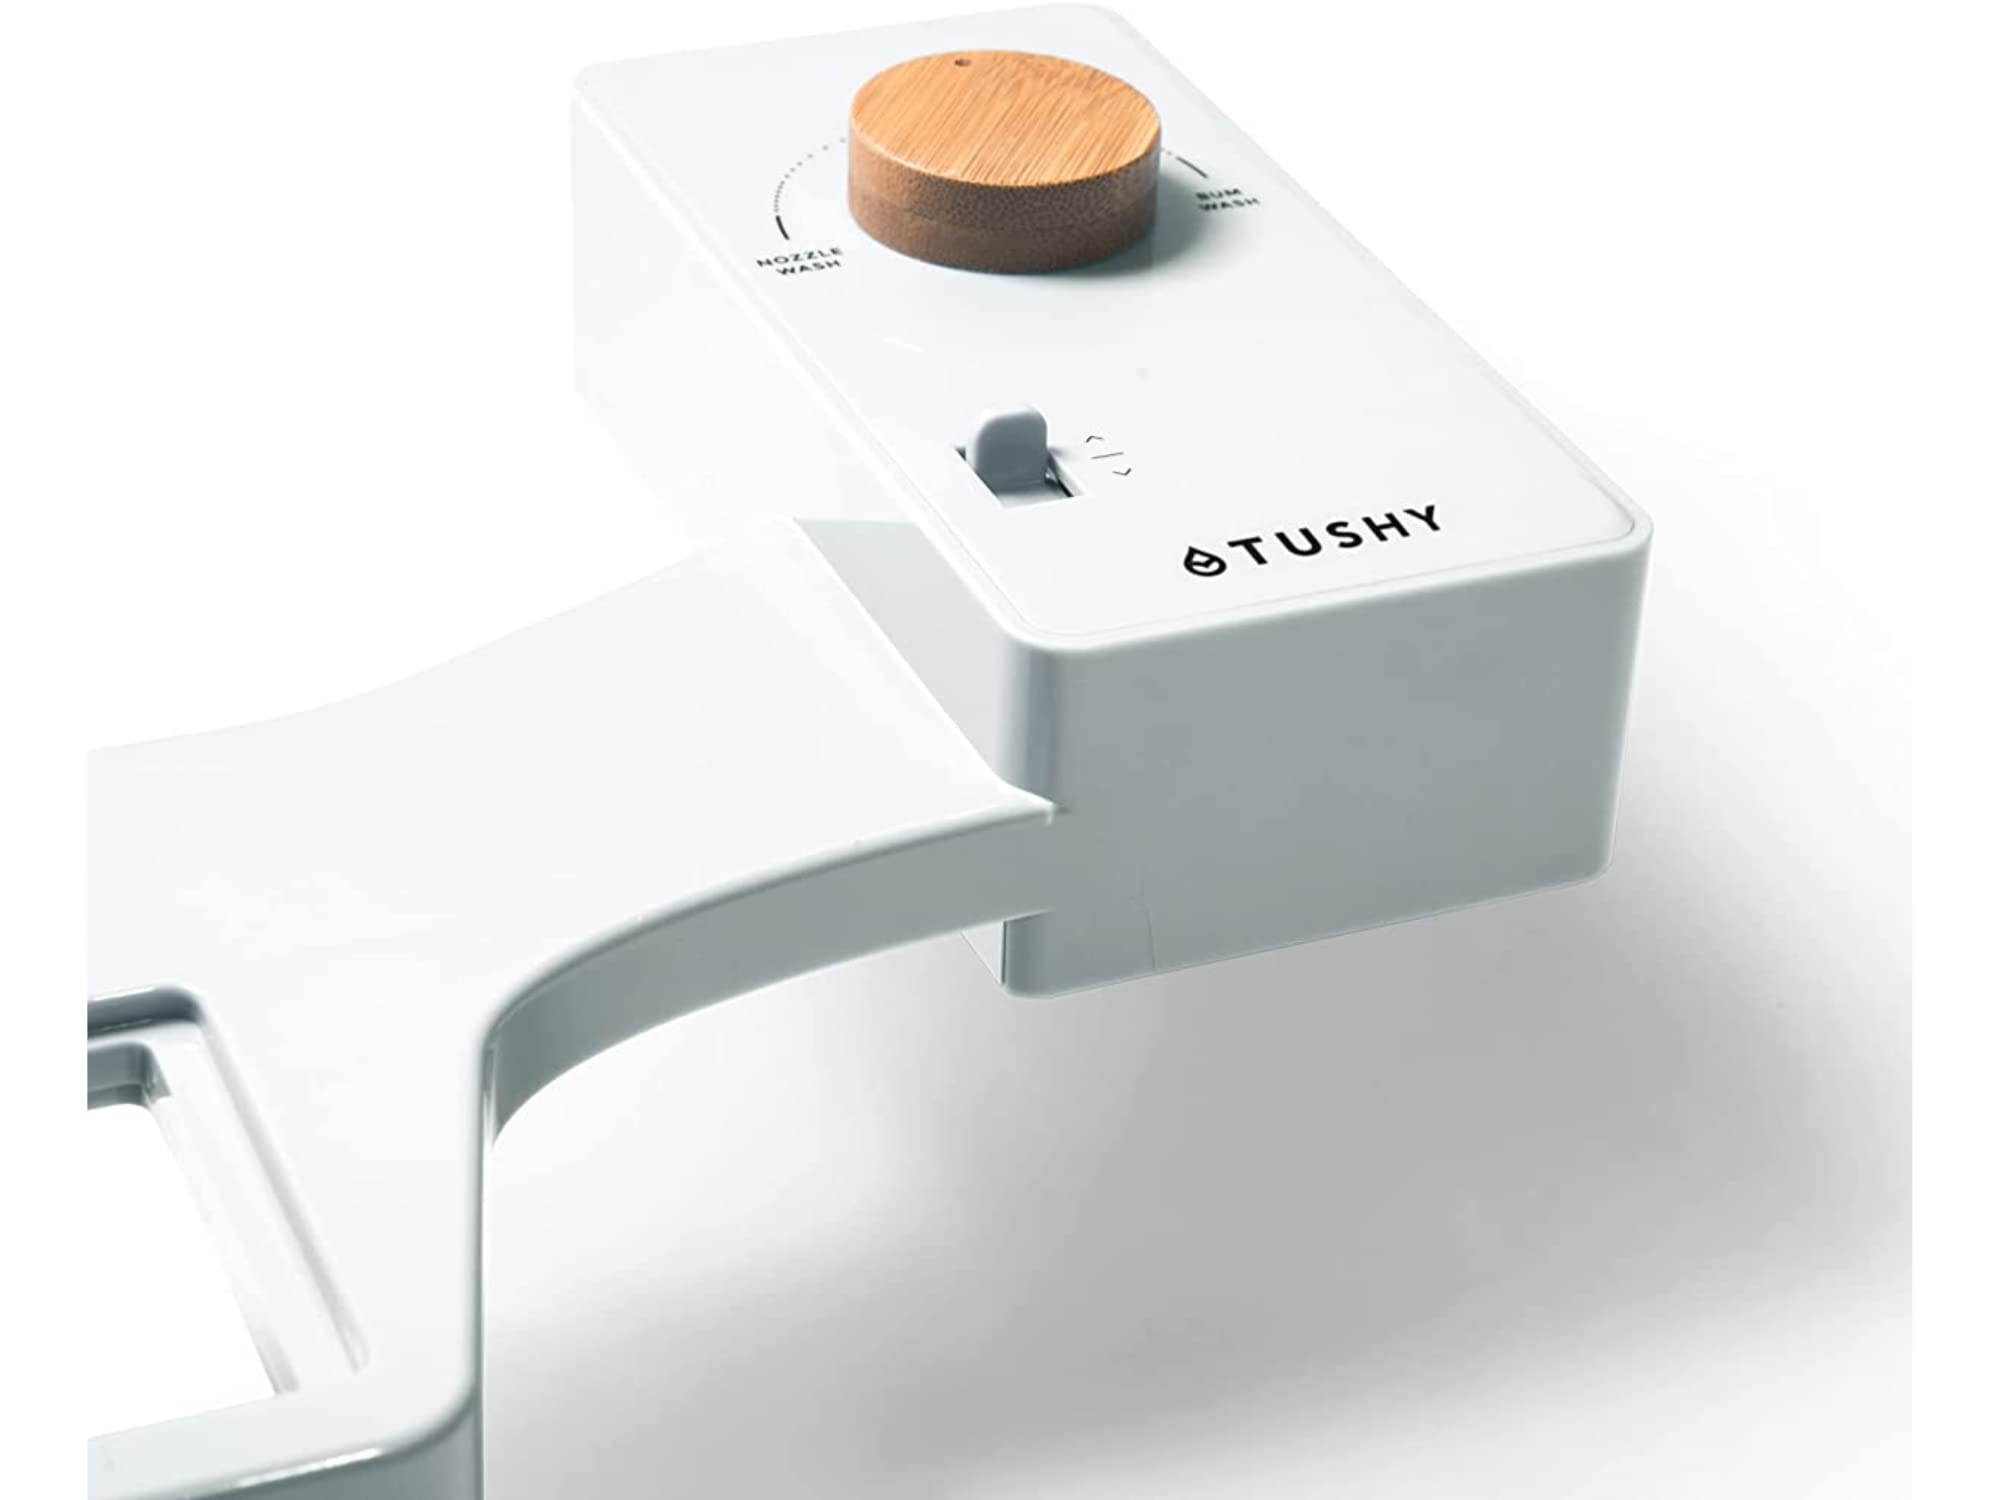 TUSHY Basic 2.0 Bidet Toilet Seat Attachment | Modern Sleek Design. Fresh Clean Water Sprayer. (Non-Electric Self Cleaning Adjustable Nozzle), White/Silver Knob